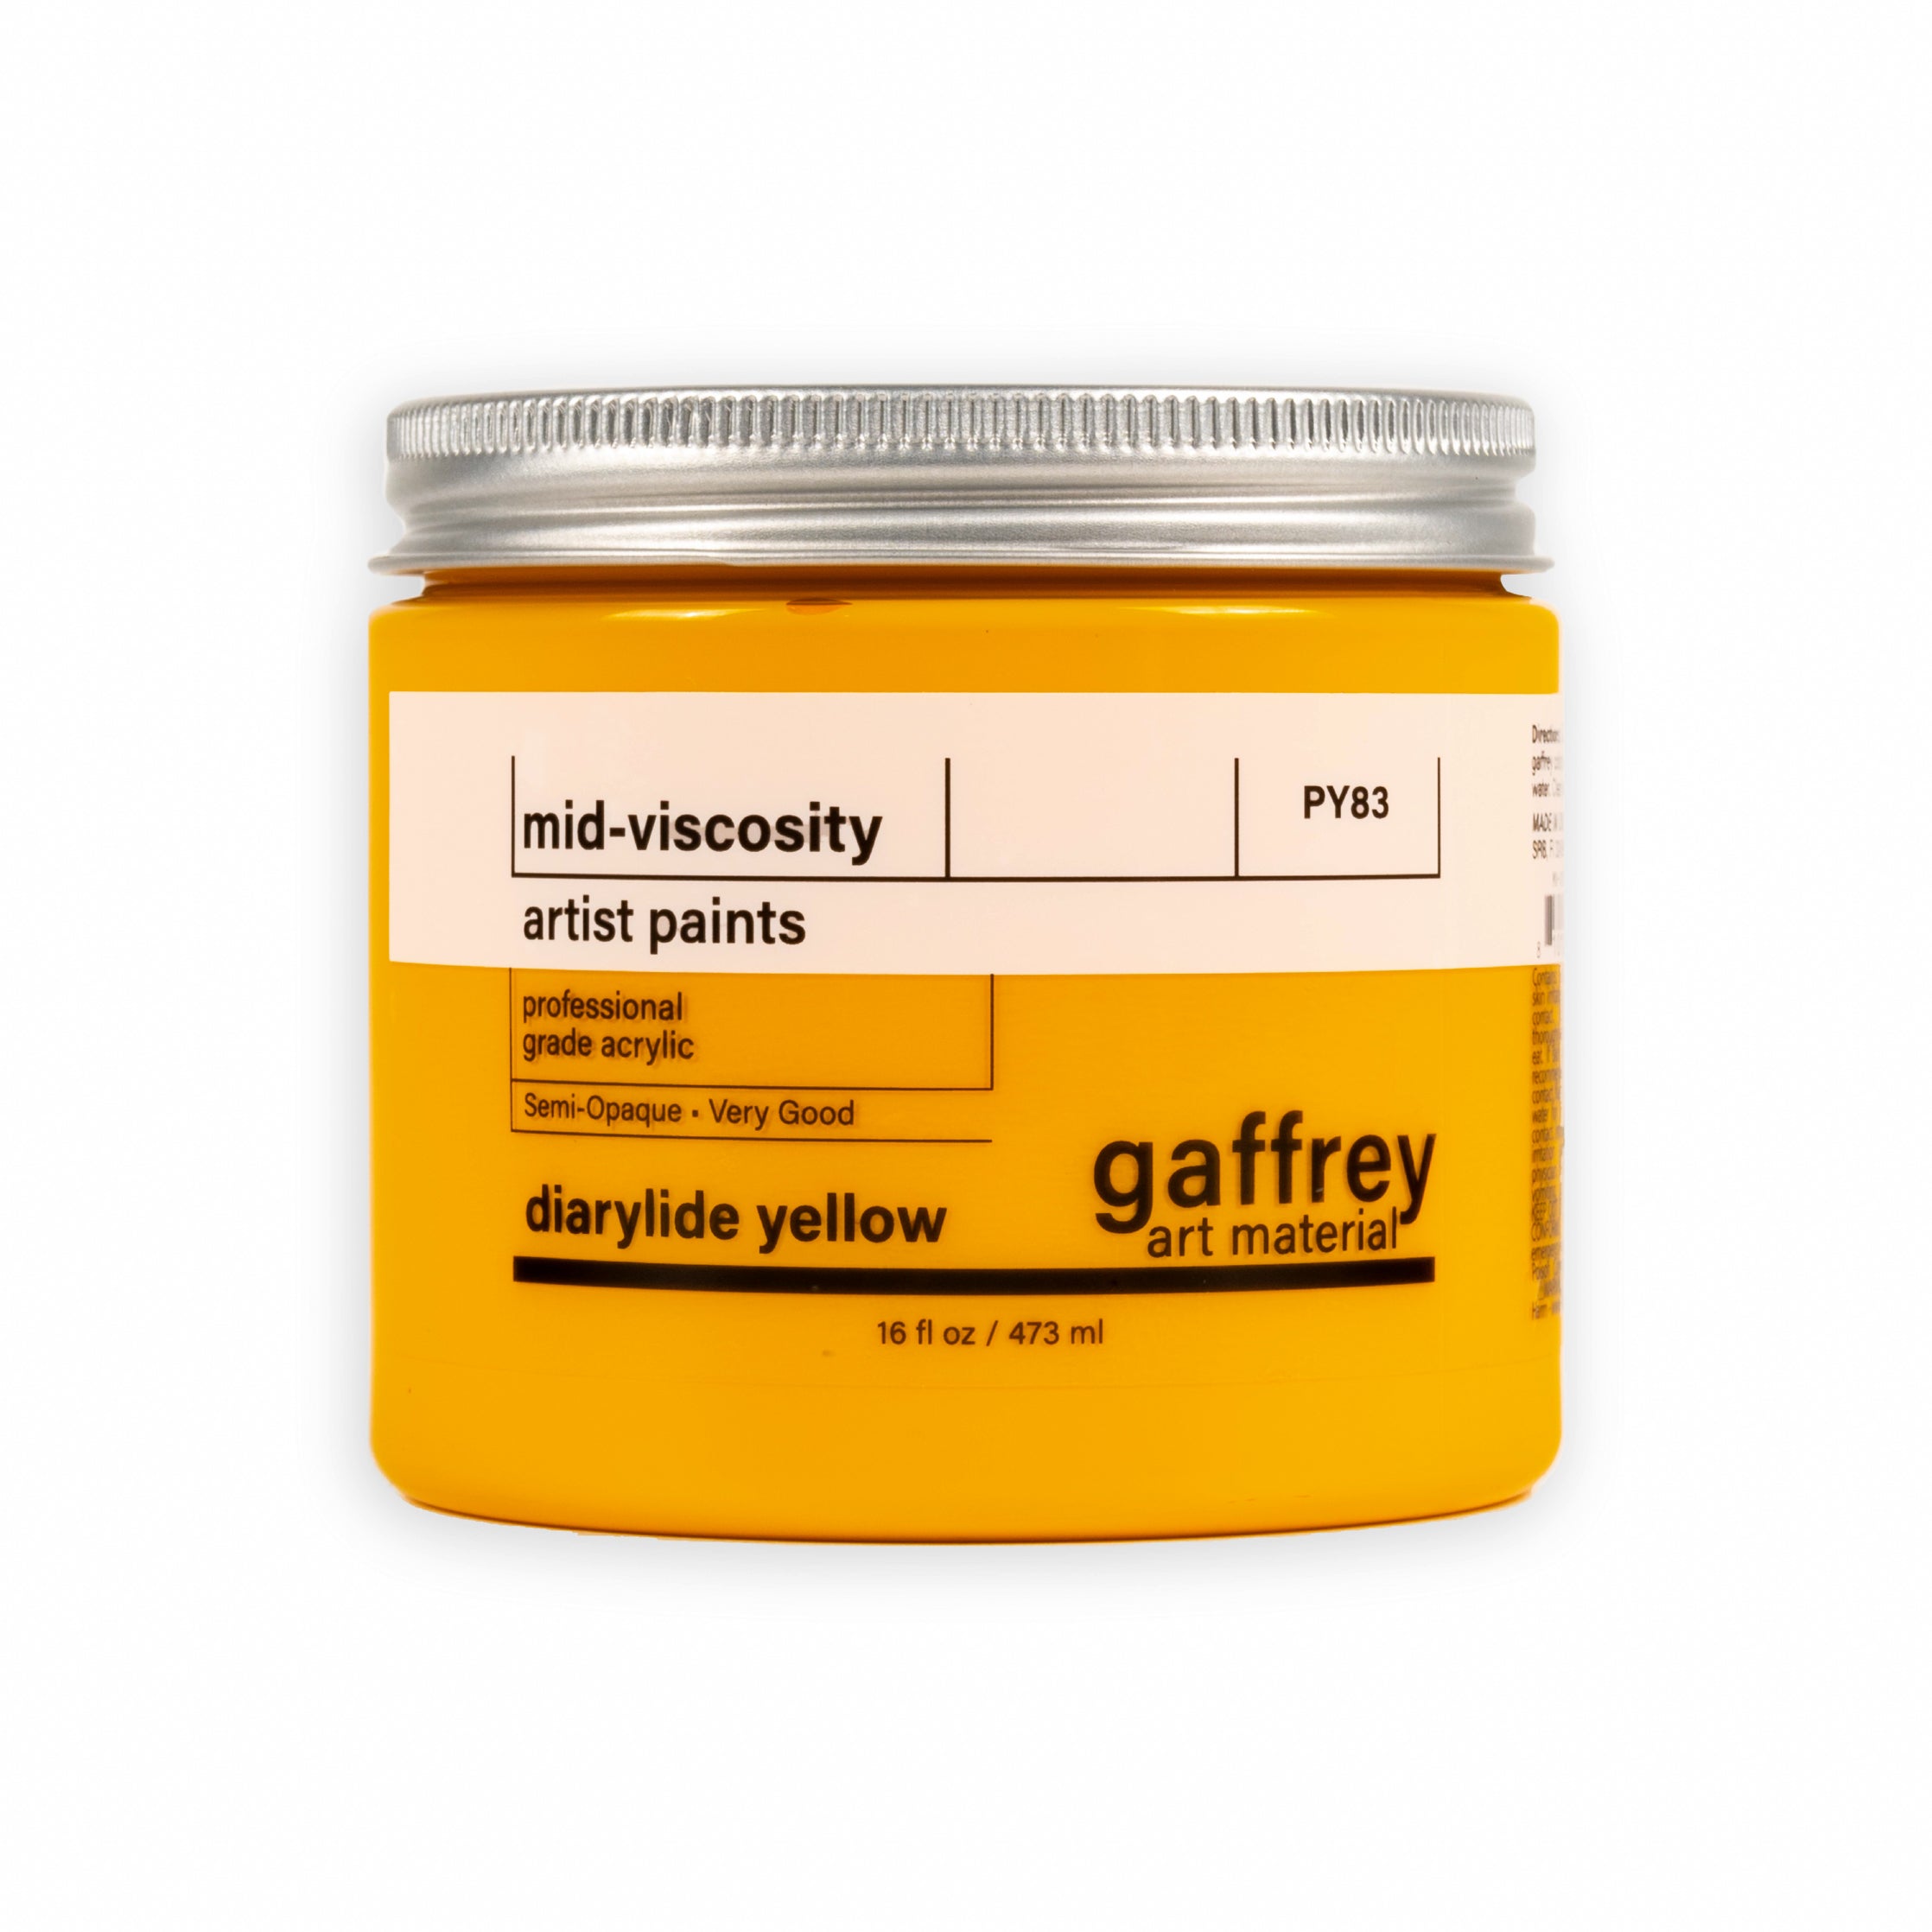 Diarylide Yellow Artist Acrylic Paint - Gaffrey Art Material